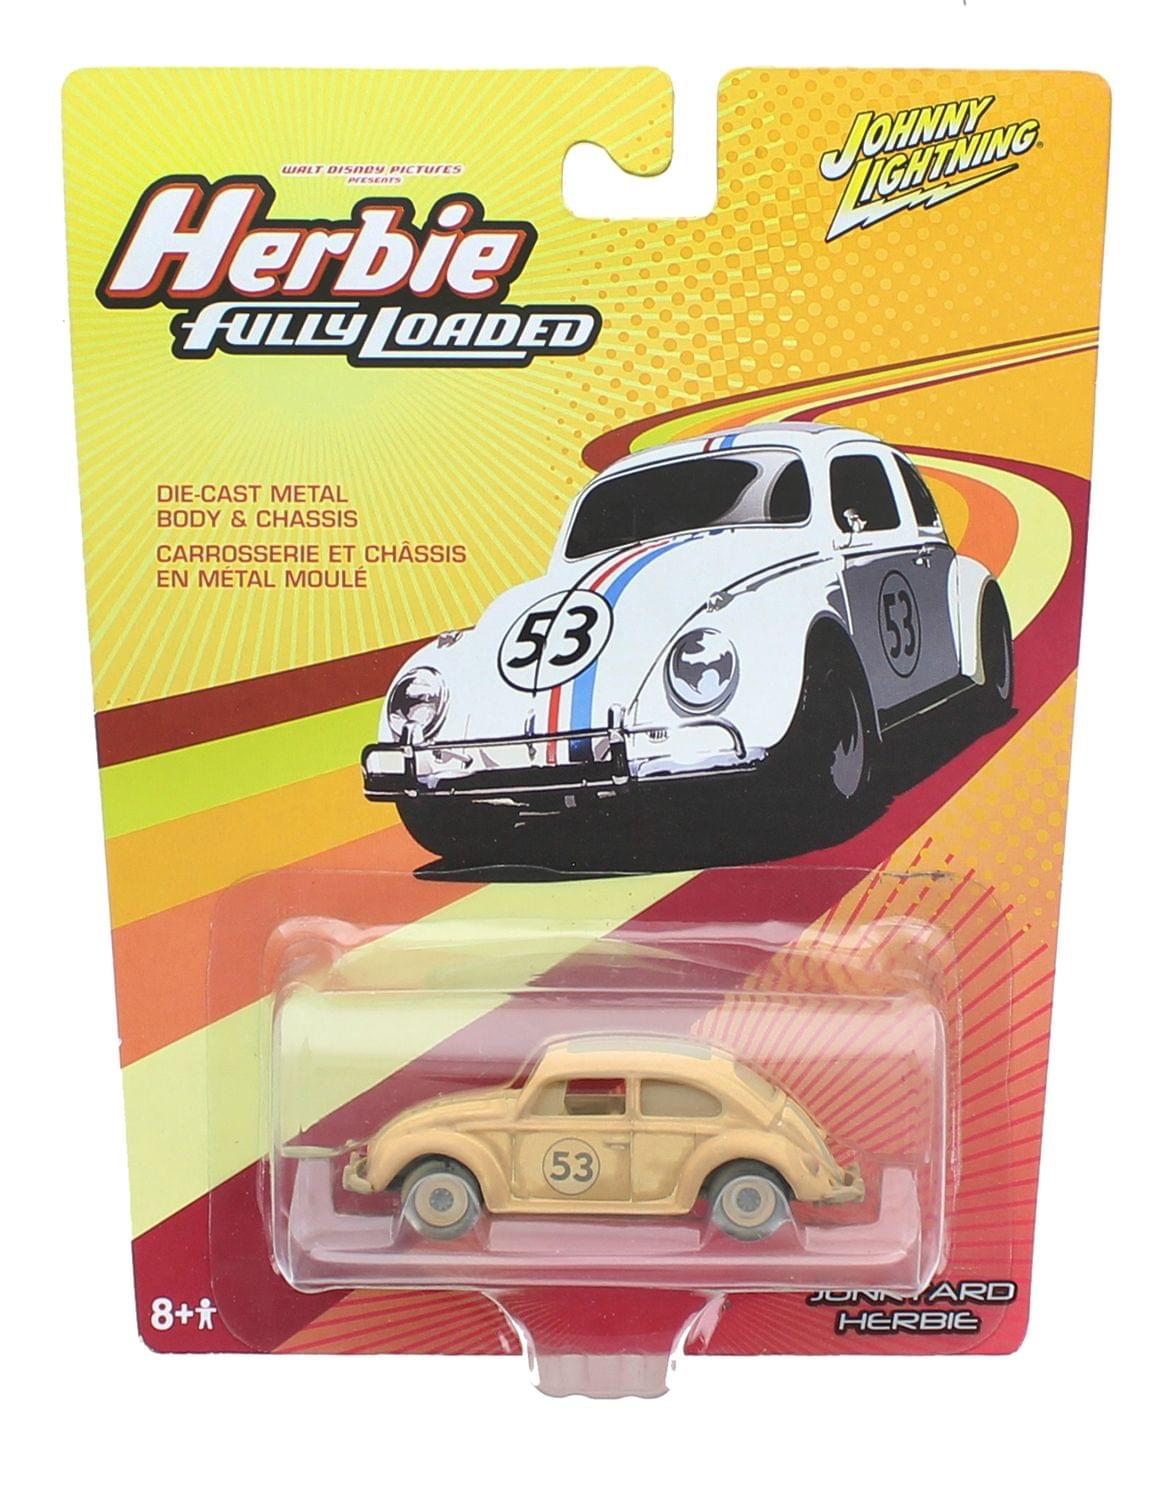 Photos - Other Toys Herbie Fully Loaded Junkyard Herbie Die-Cast Car RCT-50405C-C